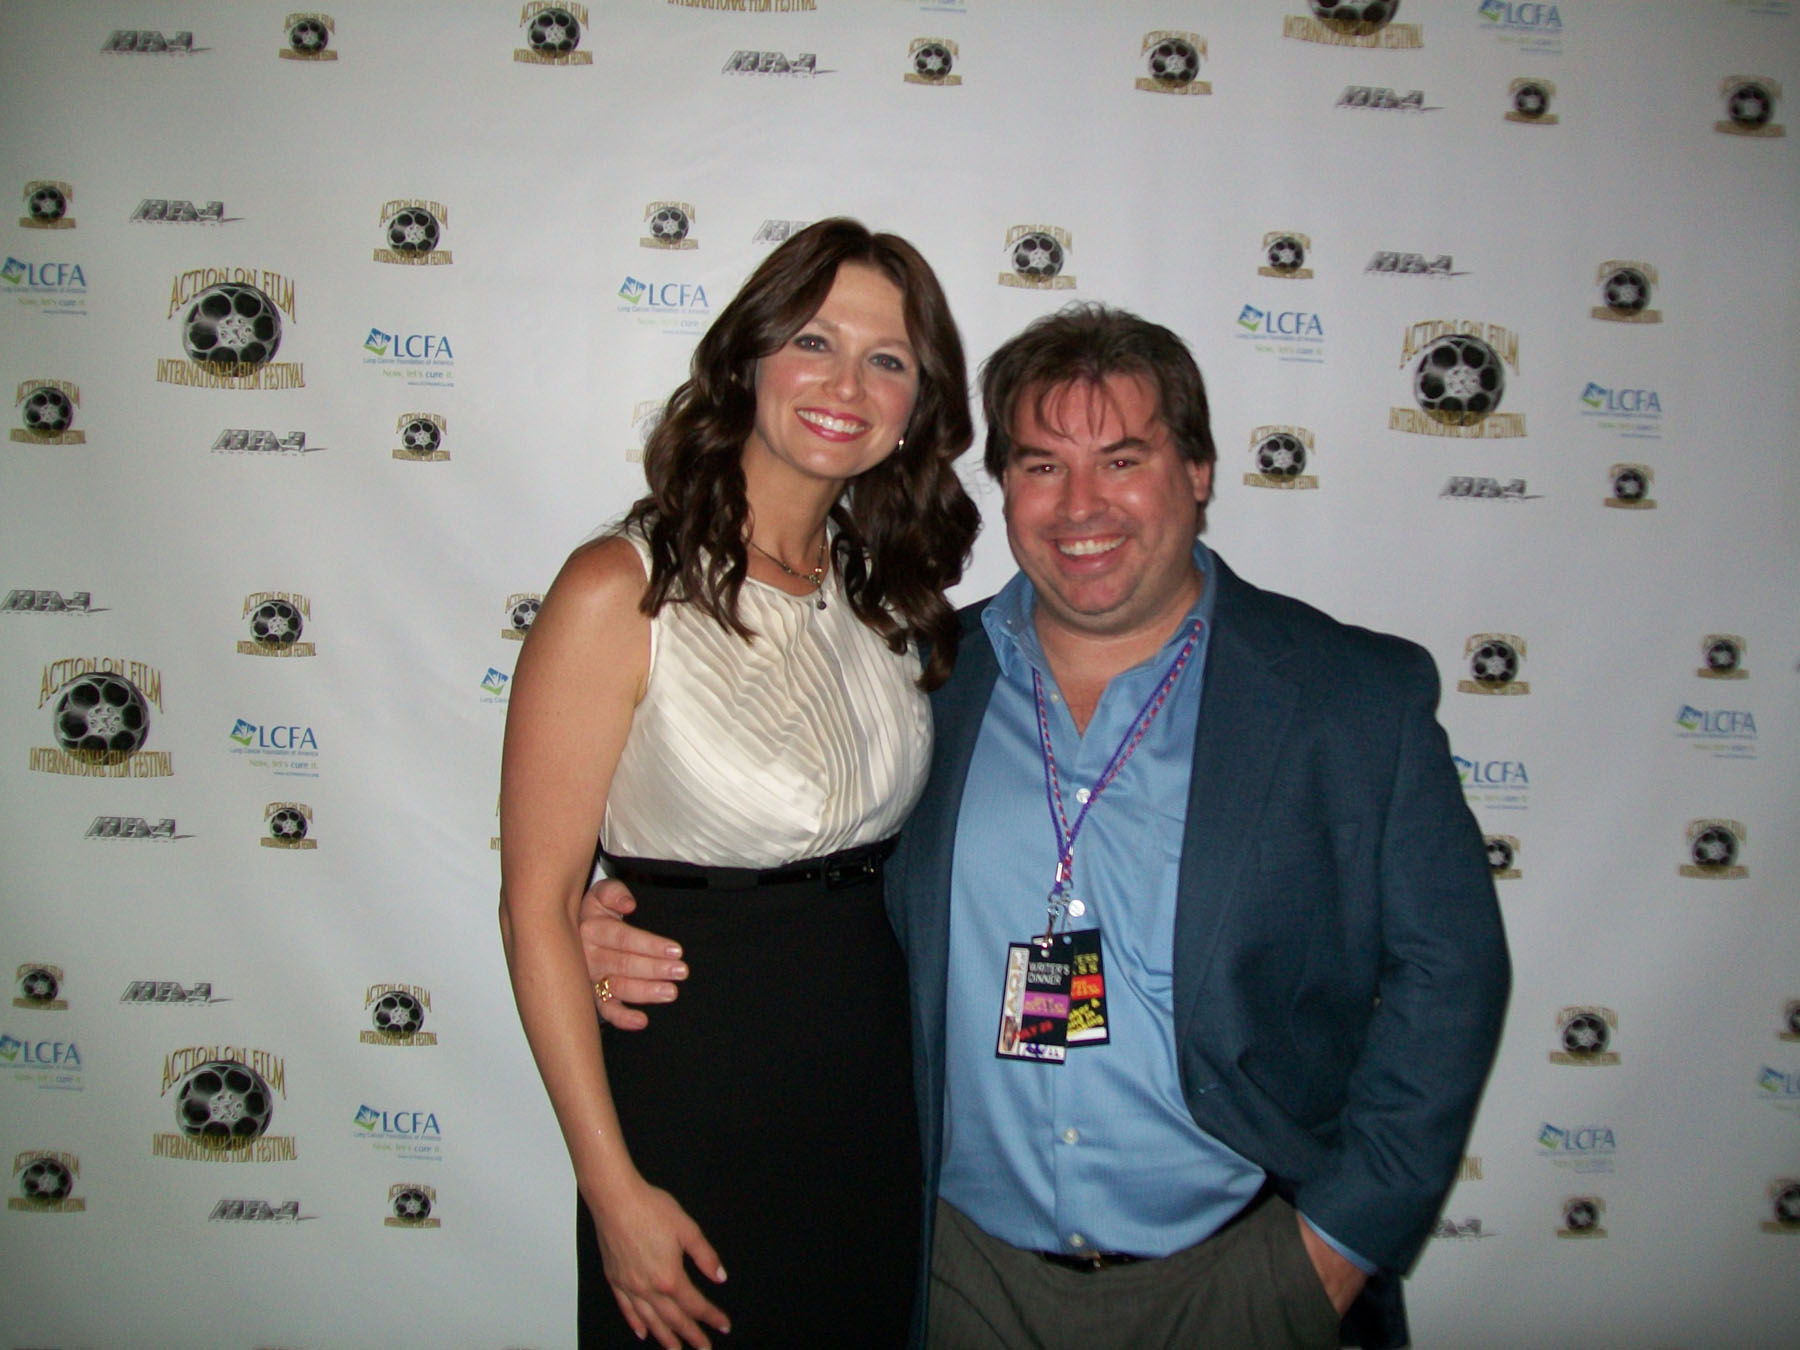 Ron Podell with actress Jennifer Marks. 2010 AOF Film Festival, Pasadena, Calif.